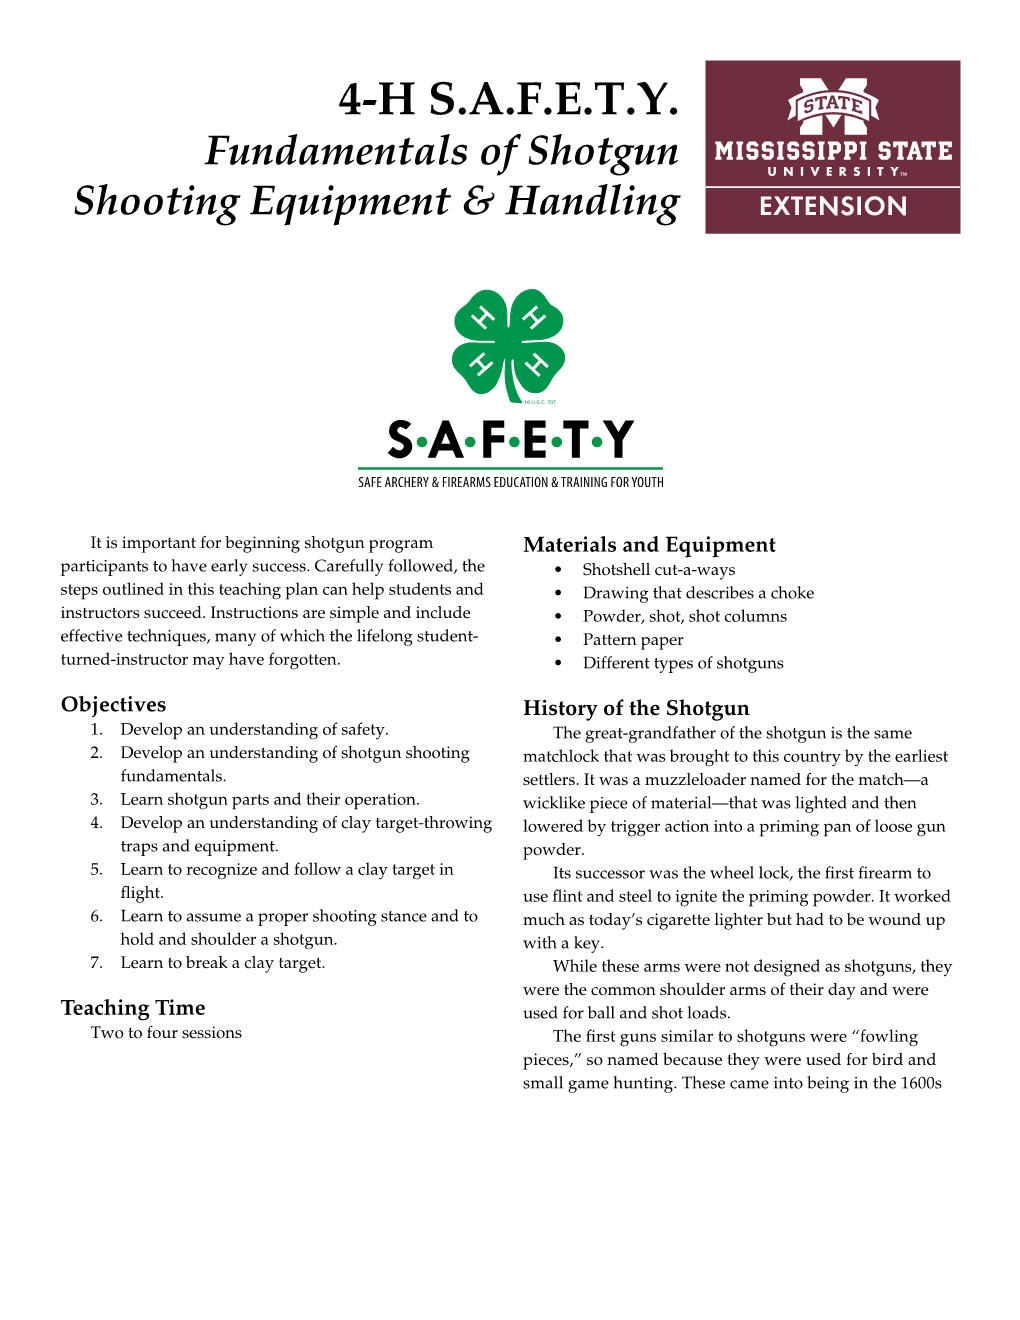 4-H S.A.F.E.T.Y. Fundamentals of Shotgun Shooting Equipment and Handling